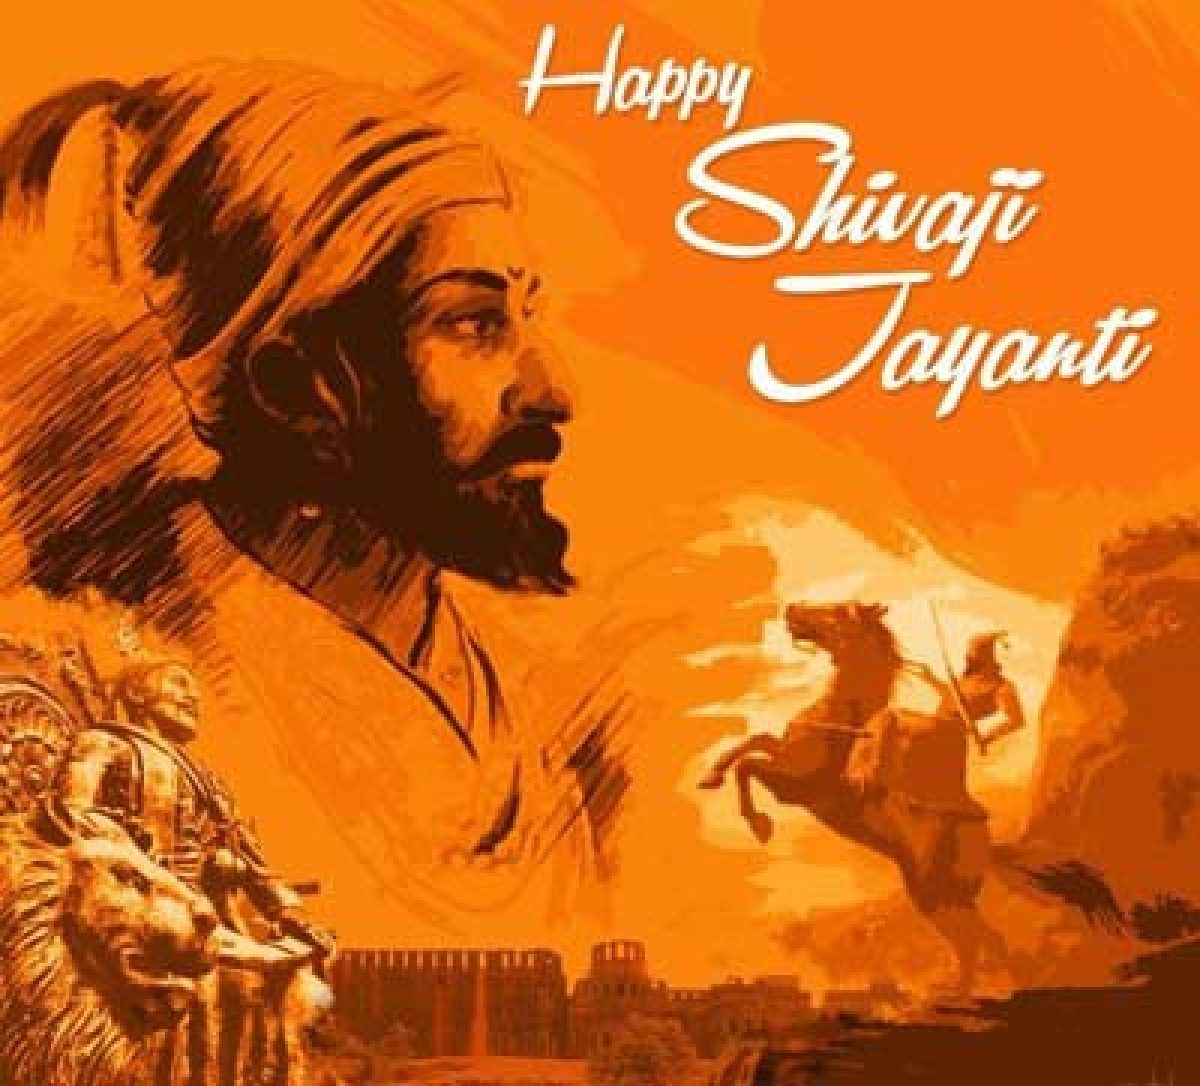 Shivaji Jayanti 2020 Image, Quotes, Status, Wallpaper, History & Celebration